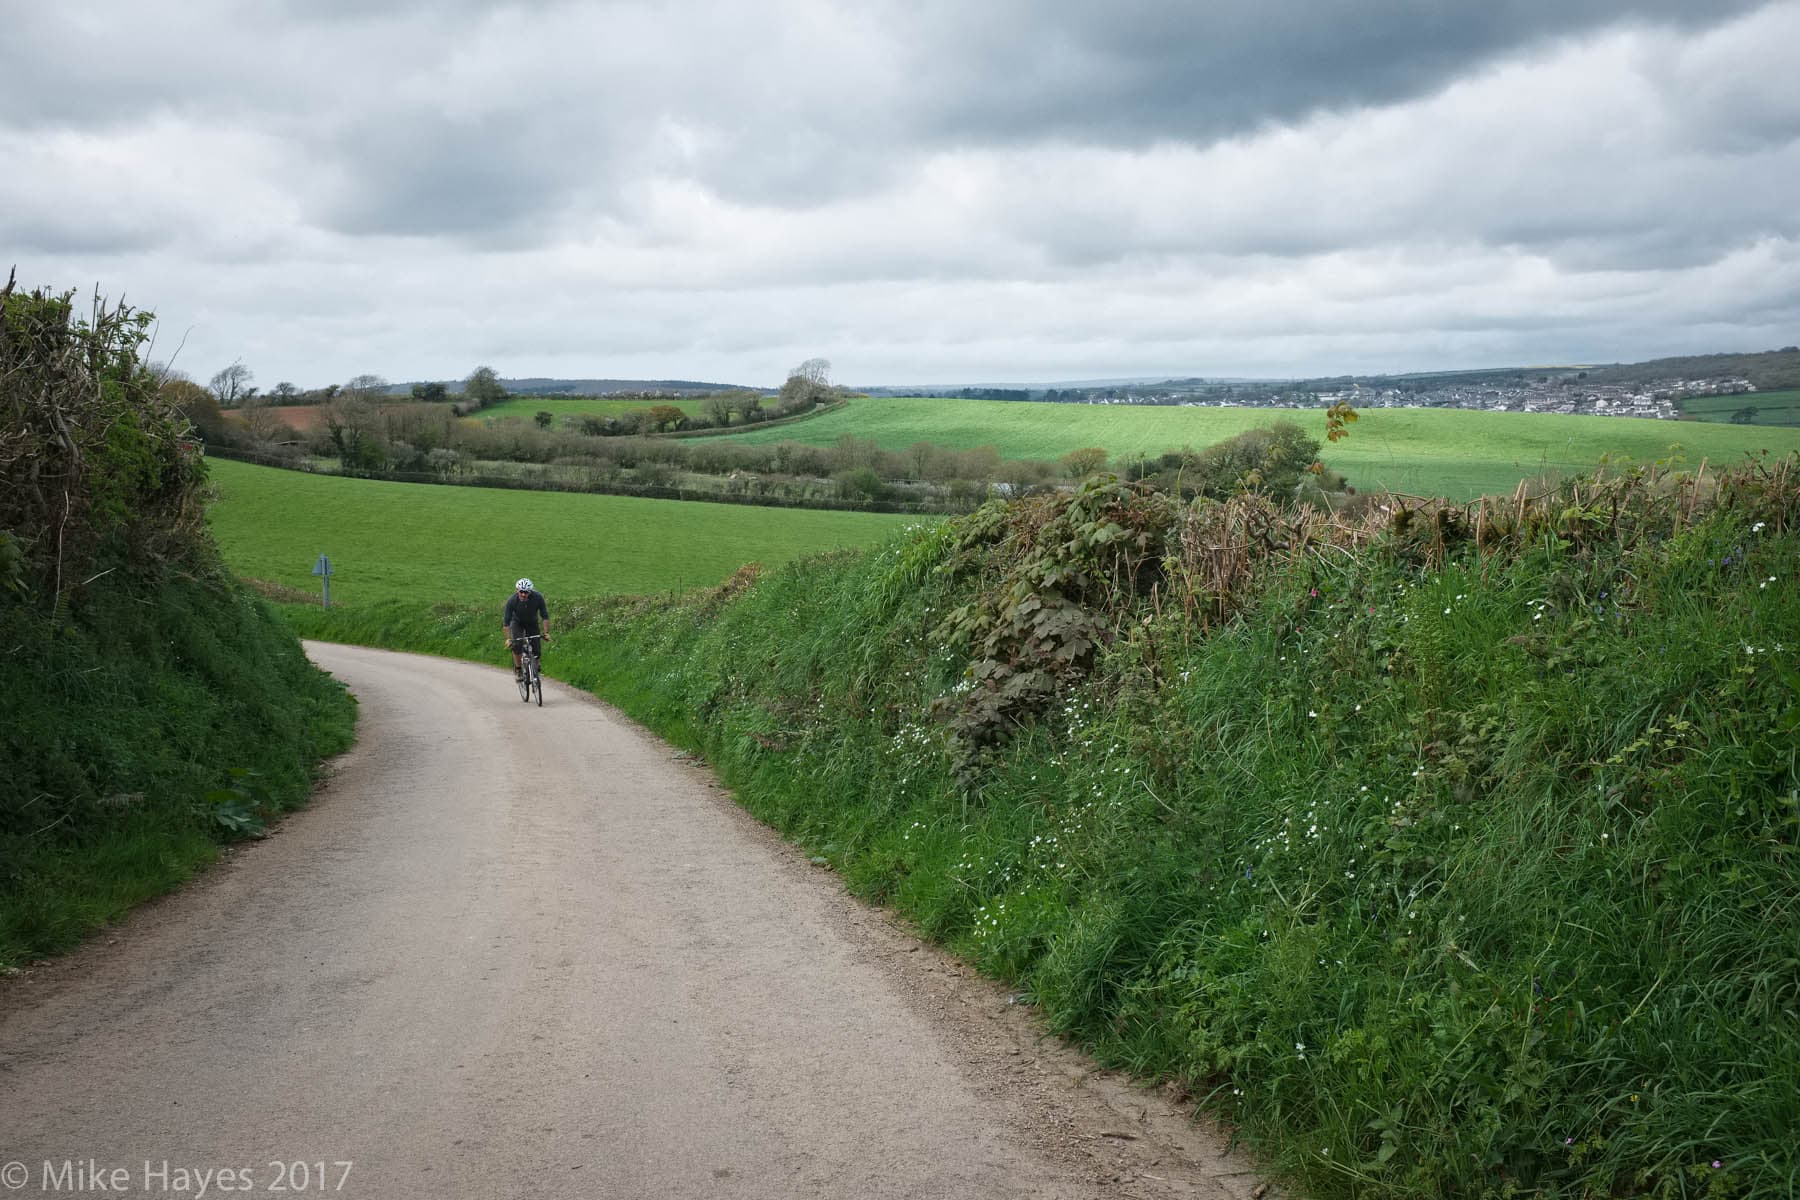 Cornish lanes exploring by bicycle